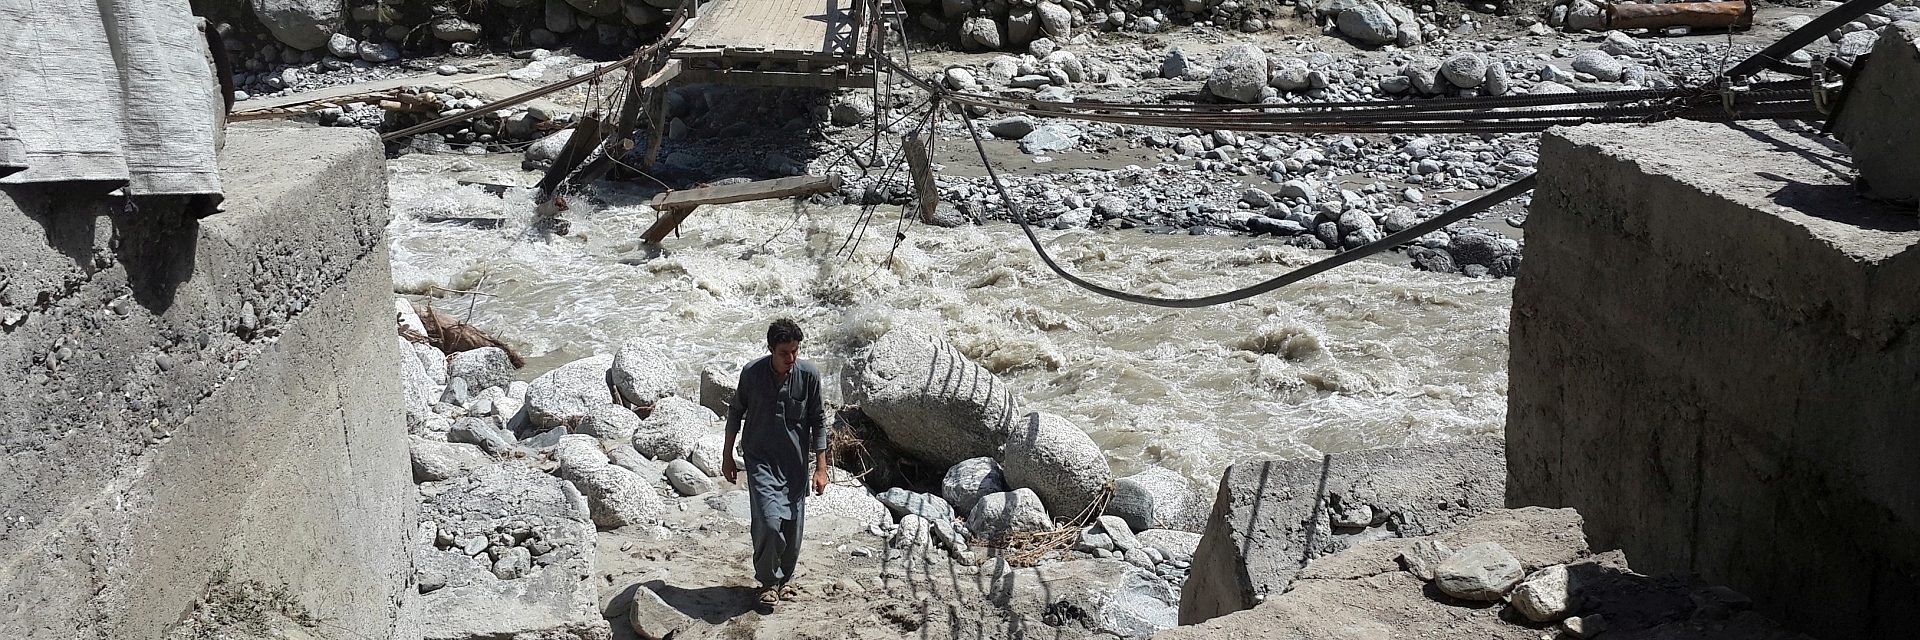 Pakistan – Hilfe nach dem Beben